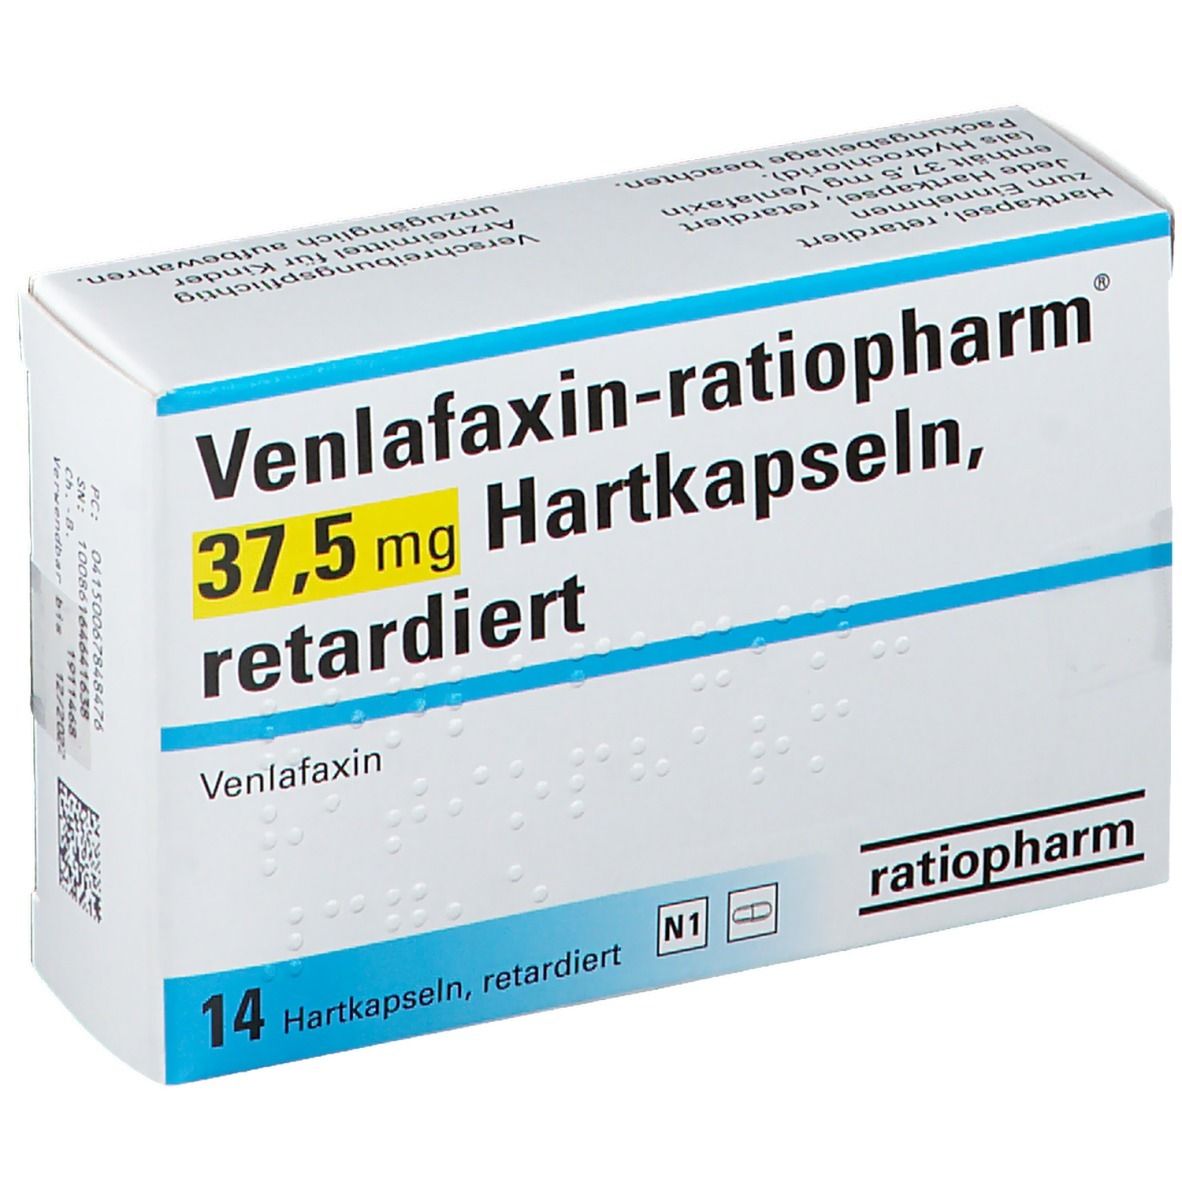 Venlafaxin-ratiopharm® 37,5 mg